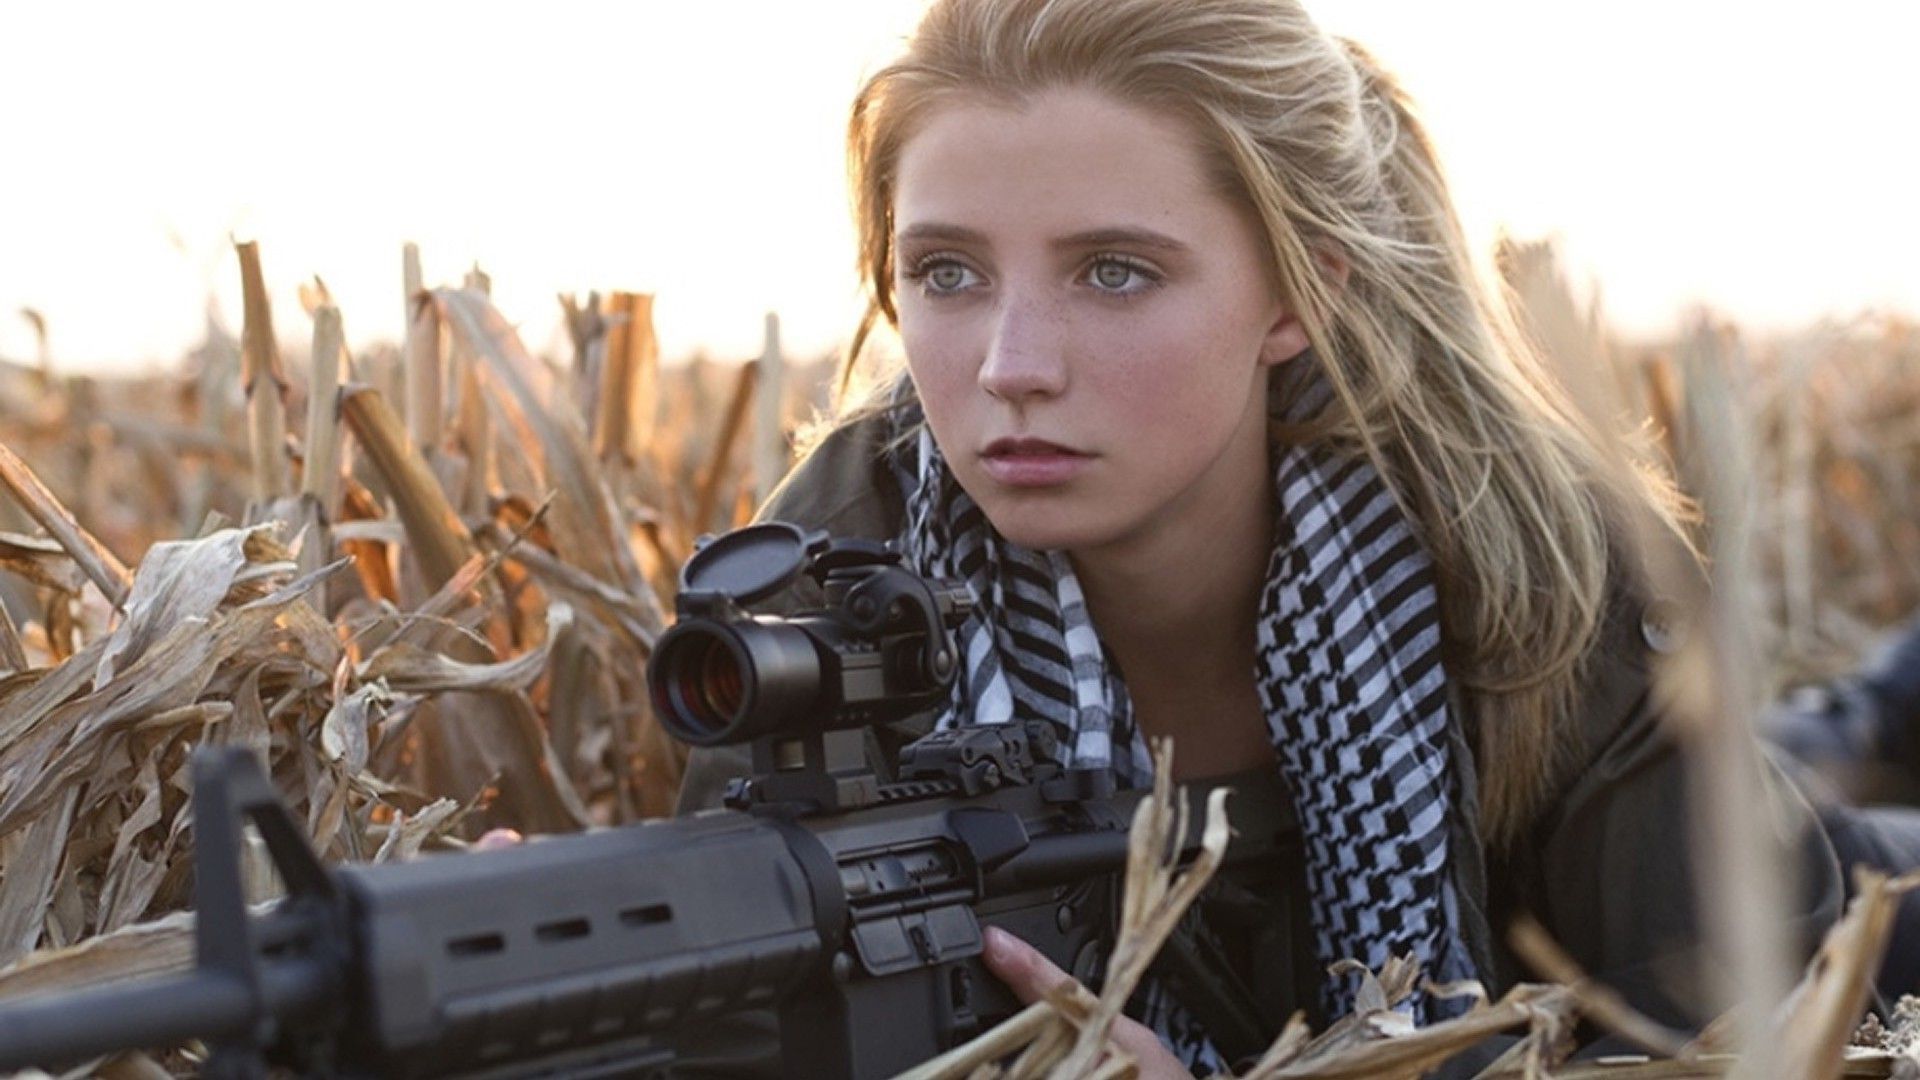 awesome Cute Sniper Girl Wallpaper HD. Sniper girl, Army girl, Military girl